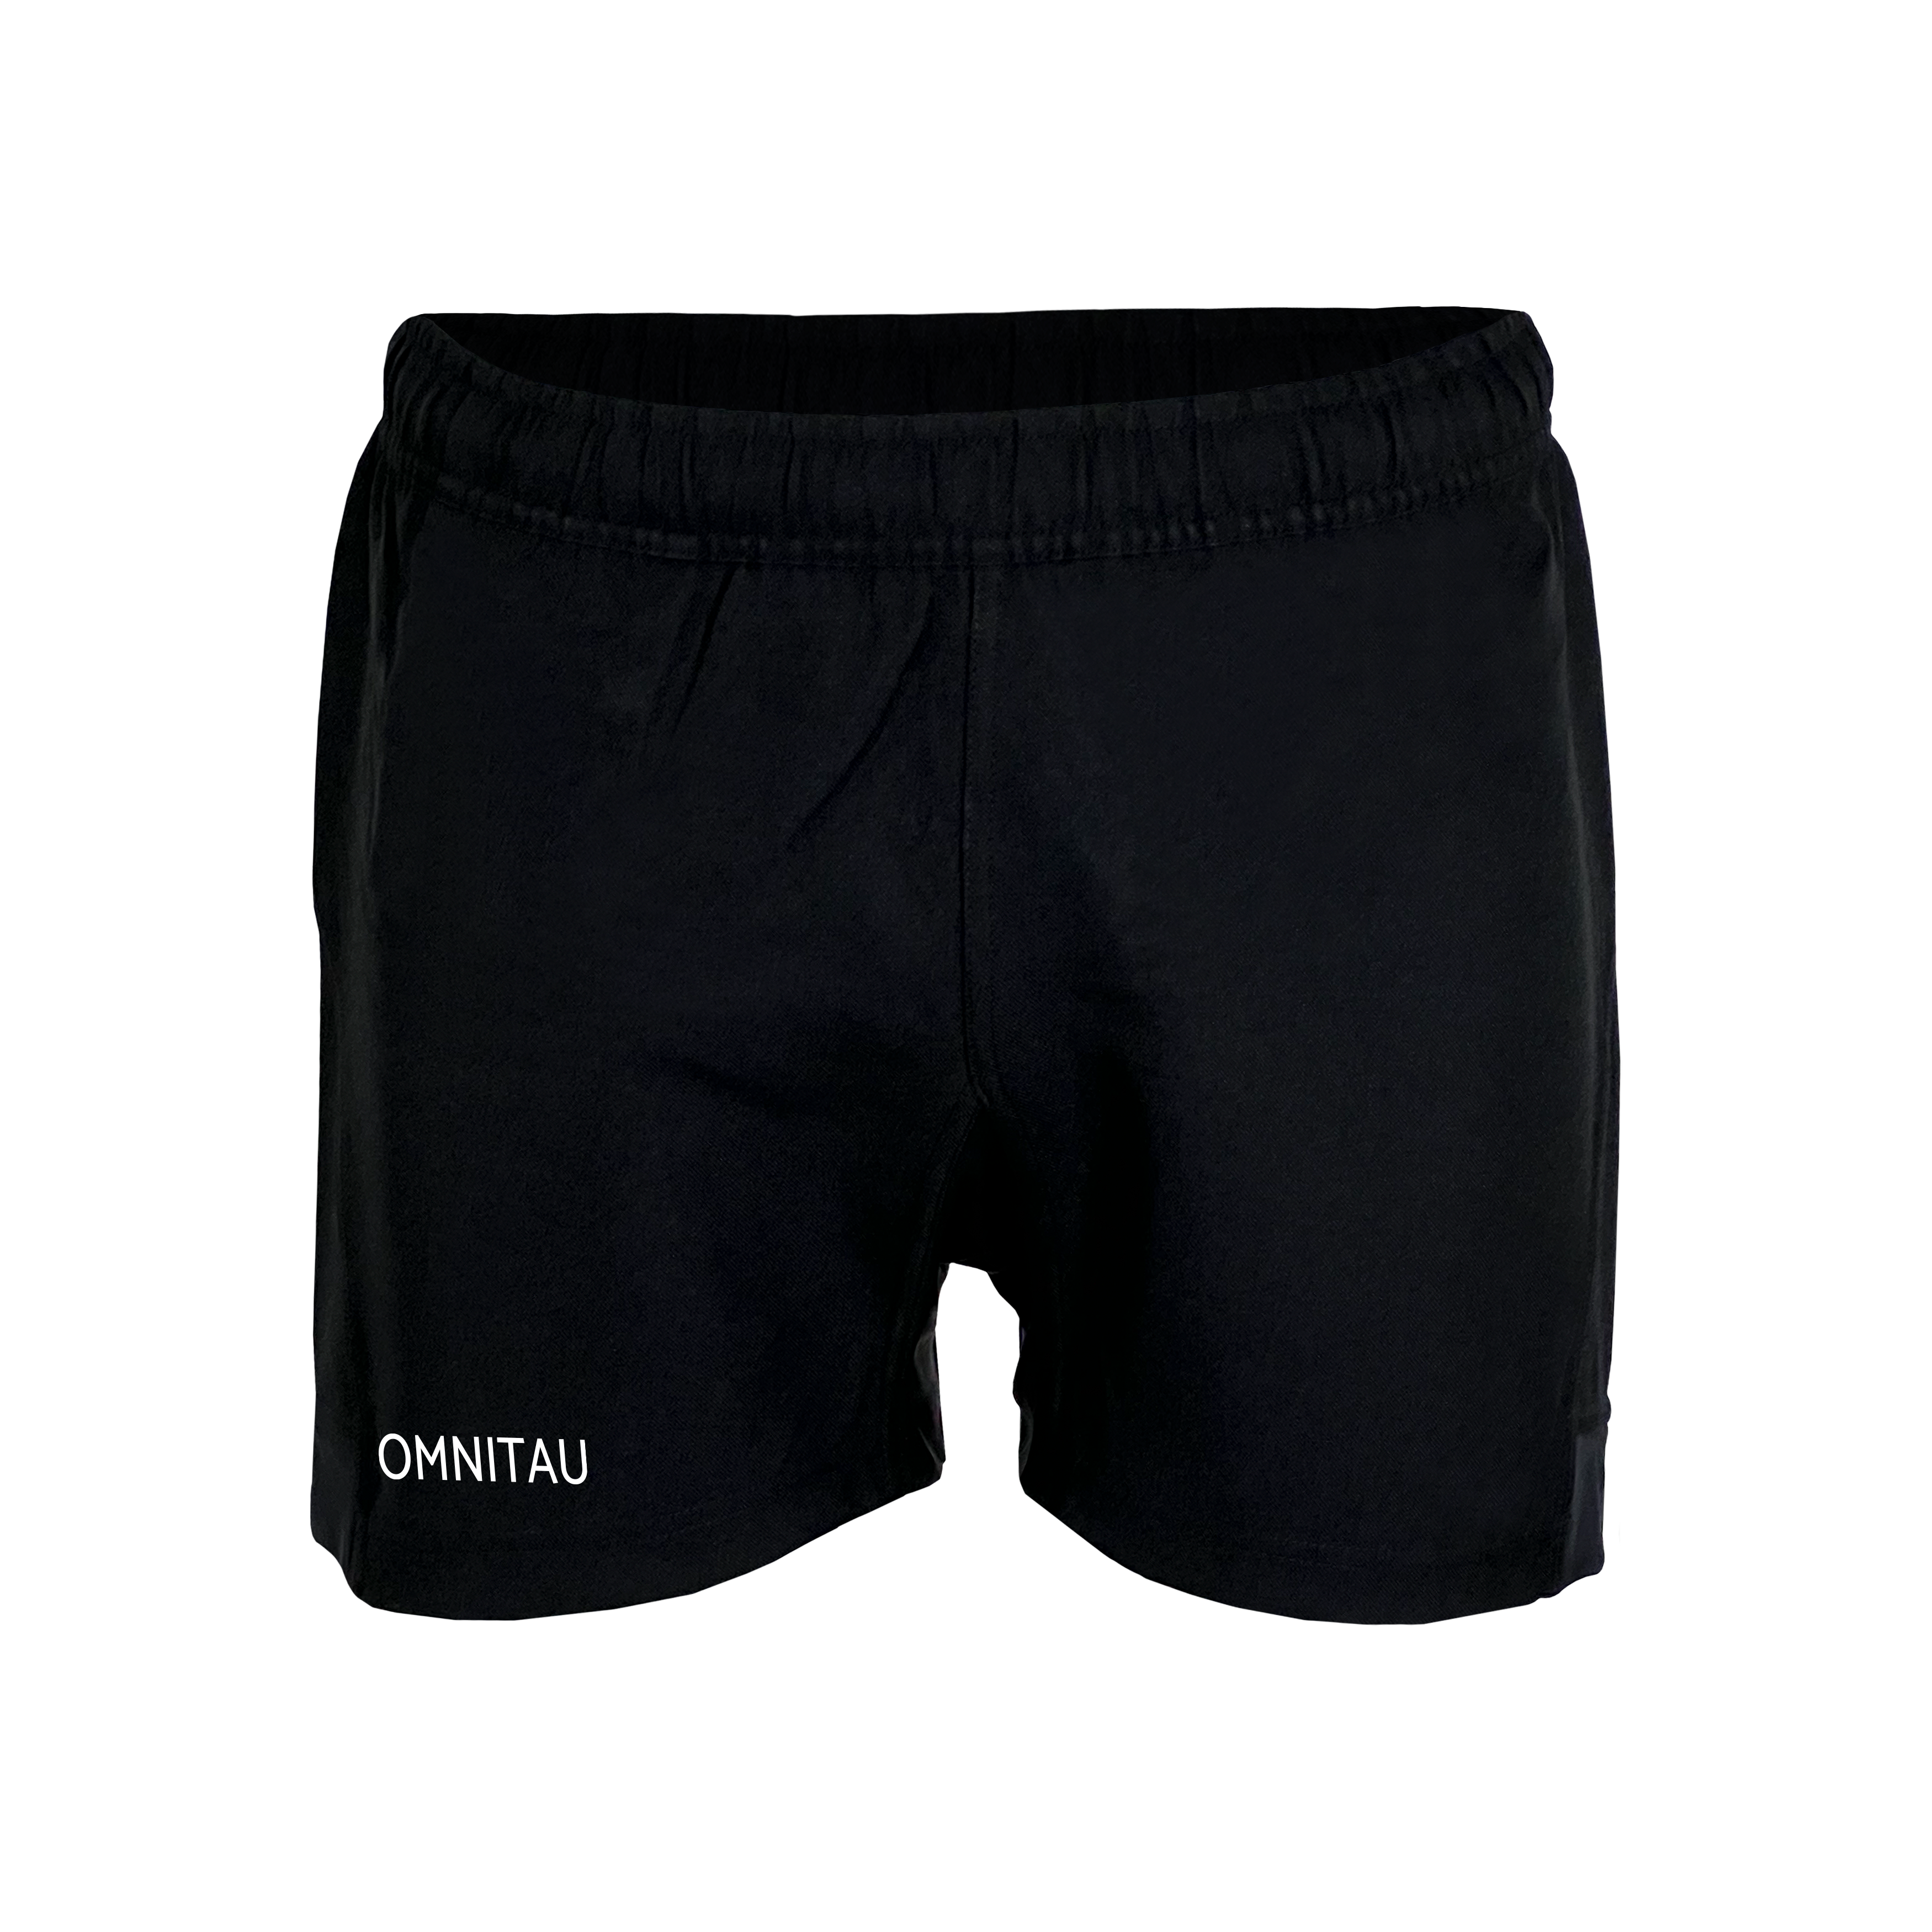 Omnitau Kid's Team Sports Breathable Rugby Shorts - Black